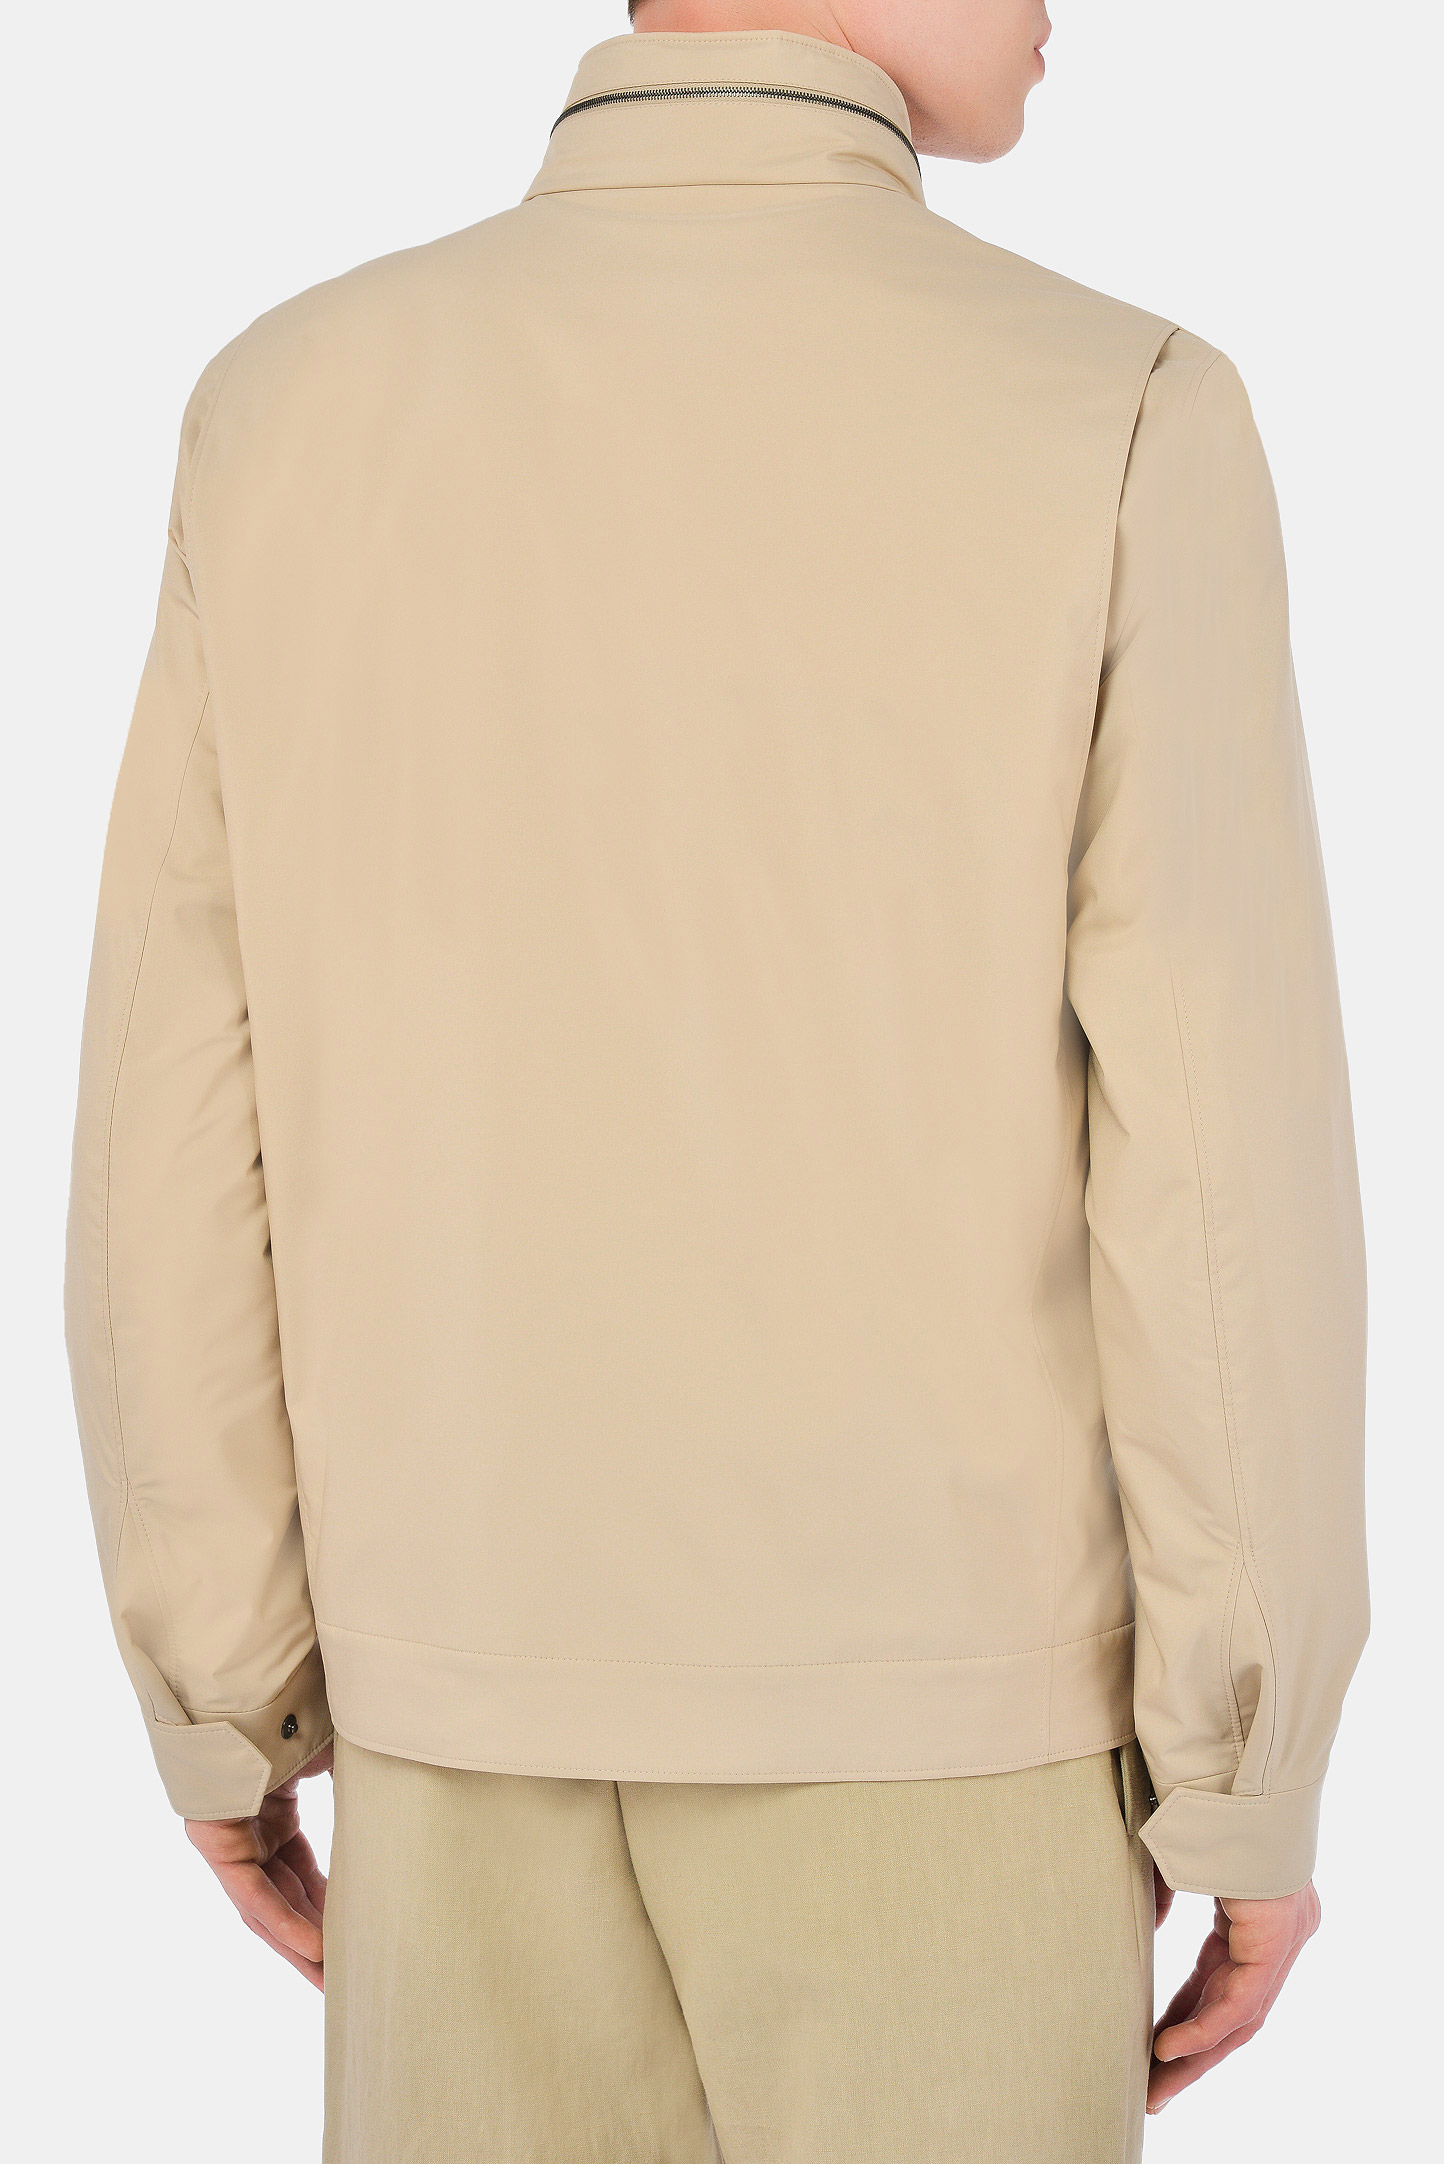 Куртка LORO PIANA F1-FAL5139, цвет: Бежевый, Мужской